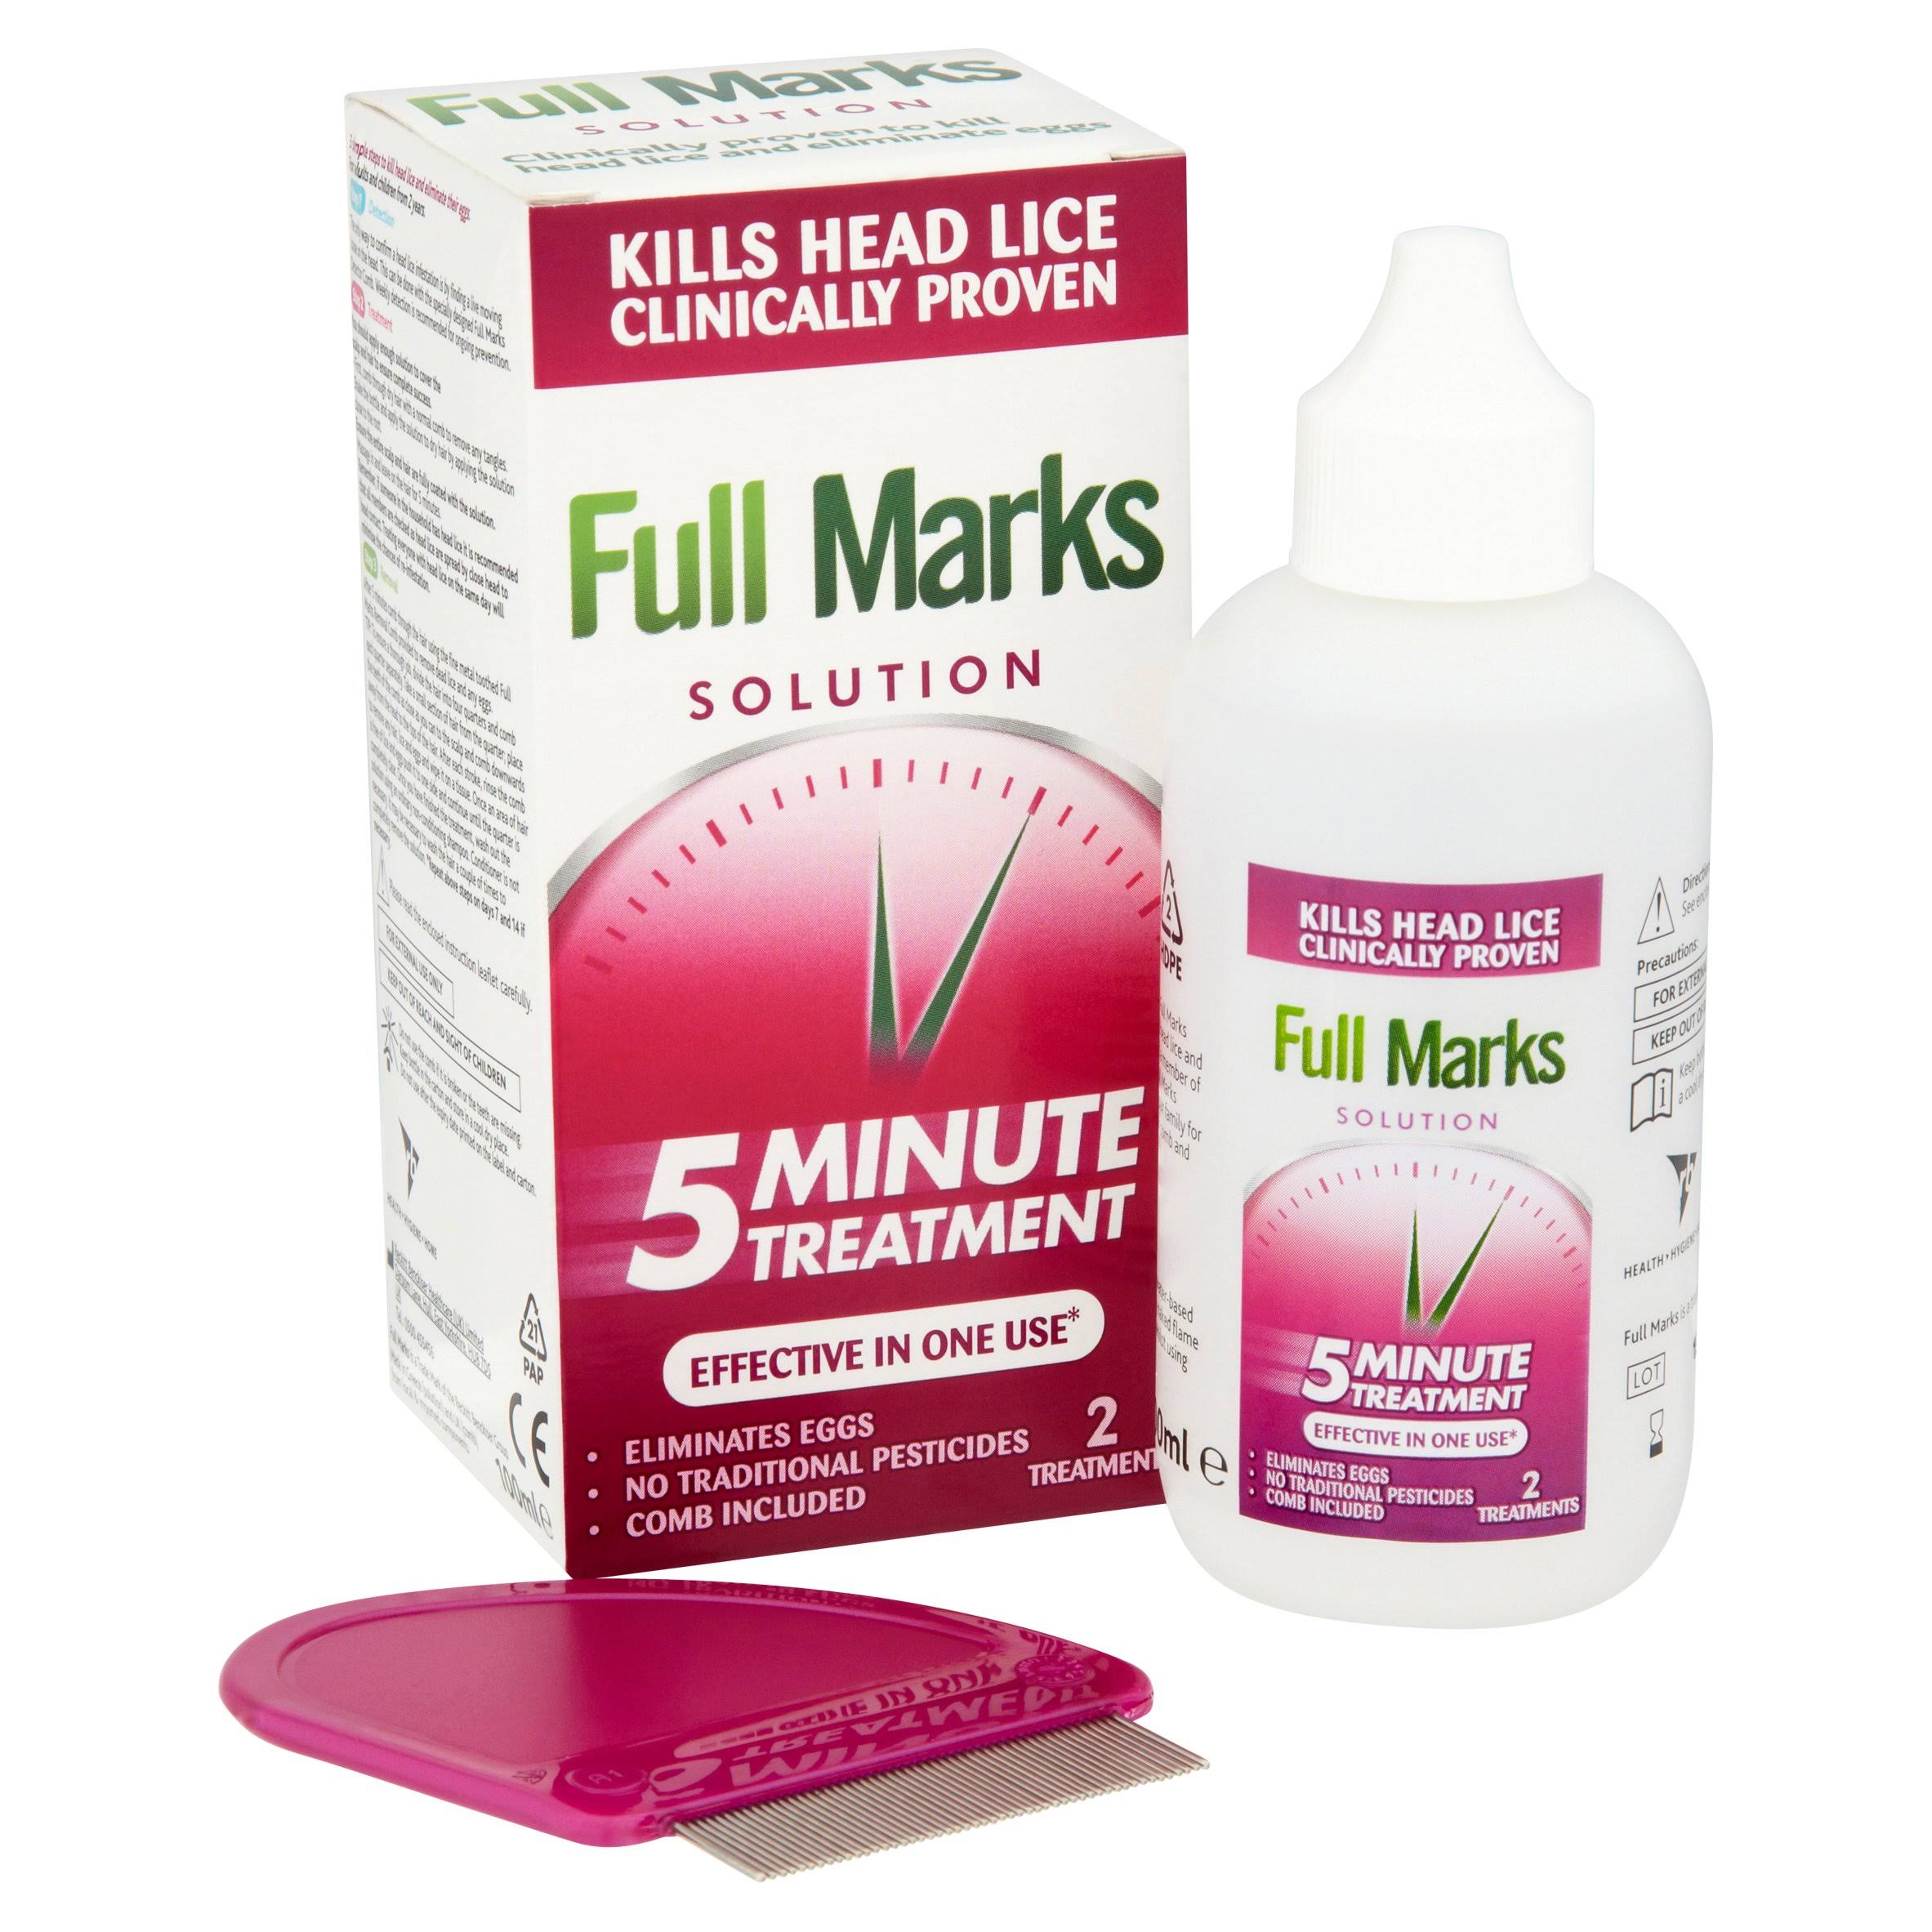 Full Marks Head Lice Solution - 100ml